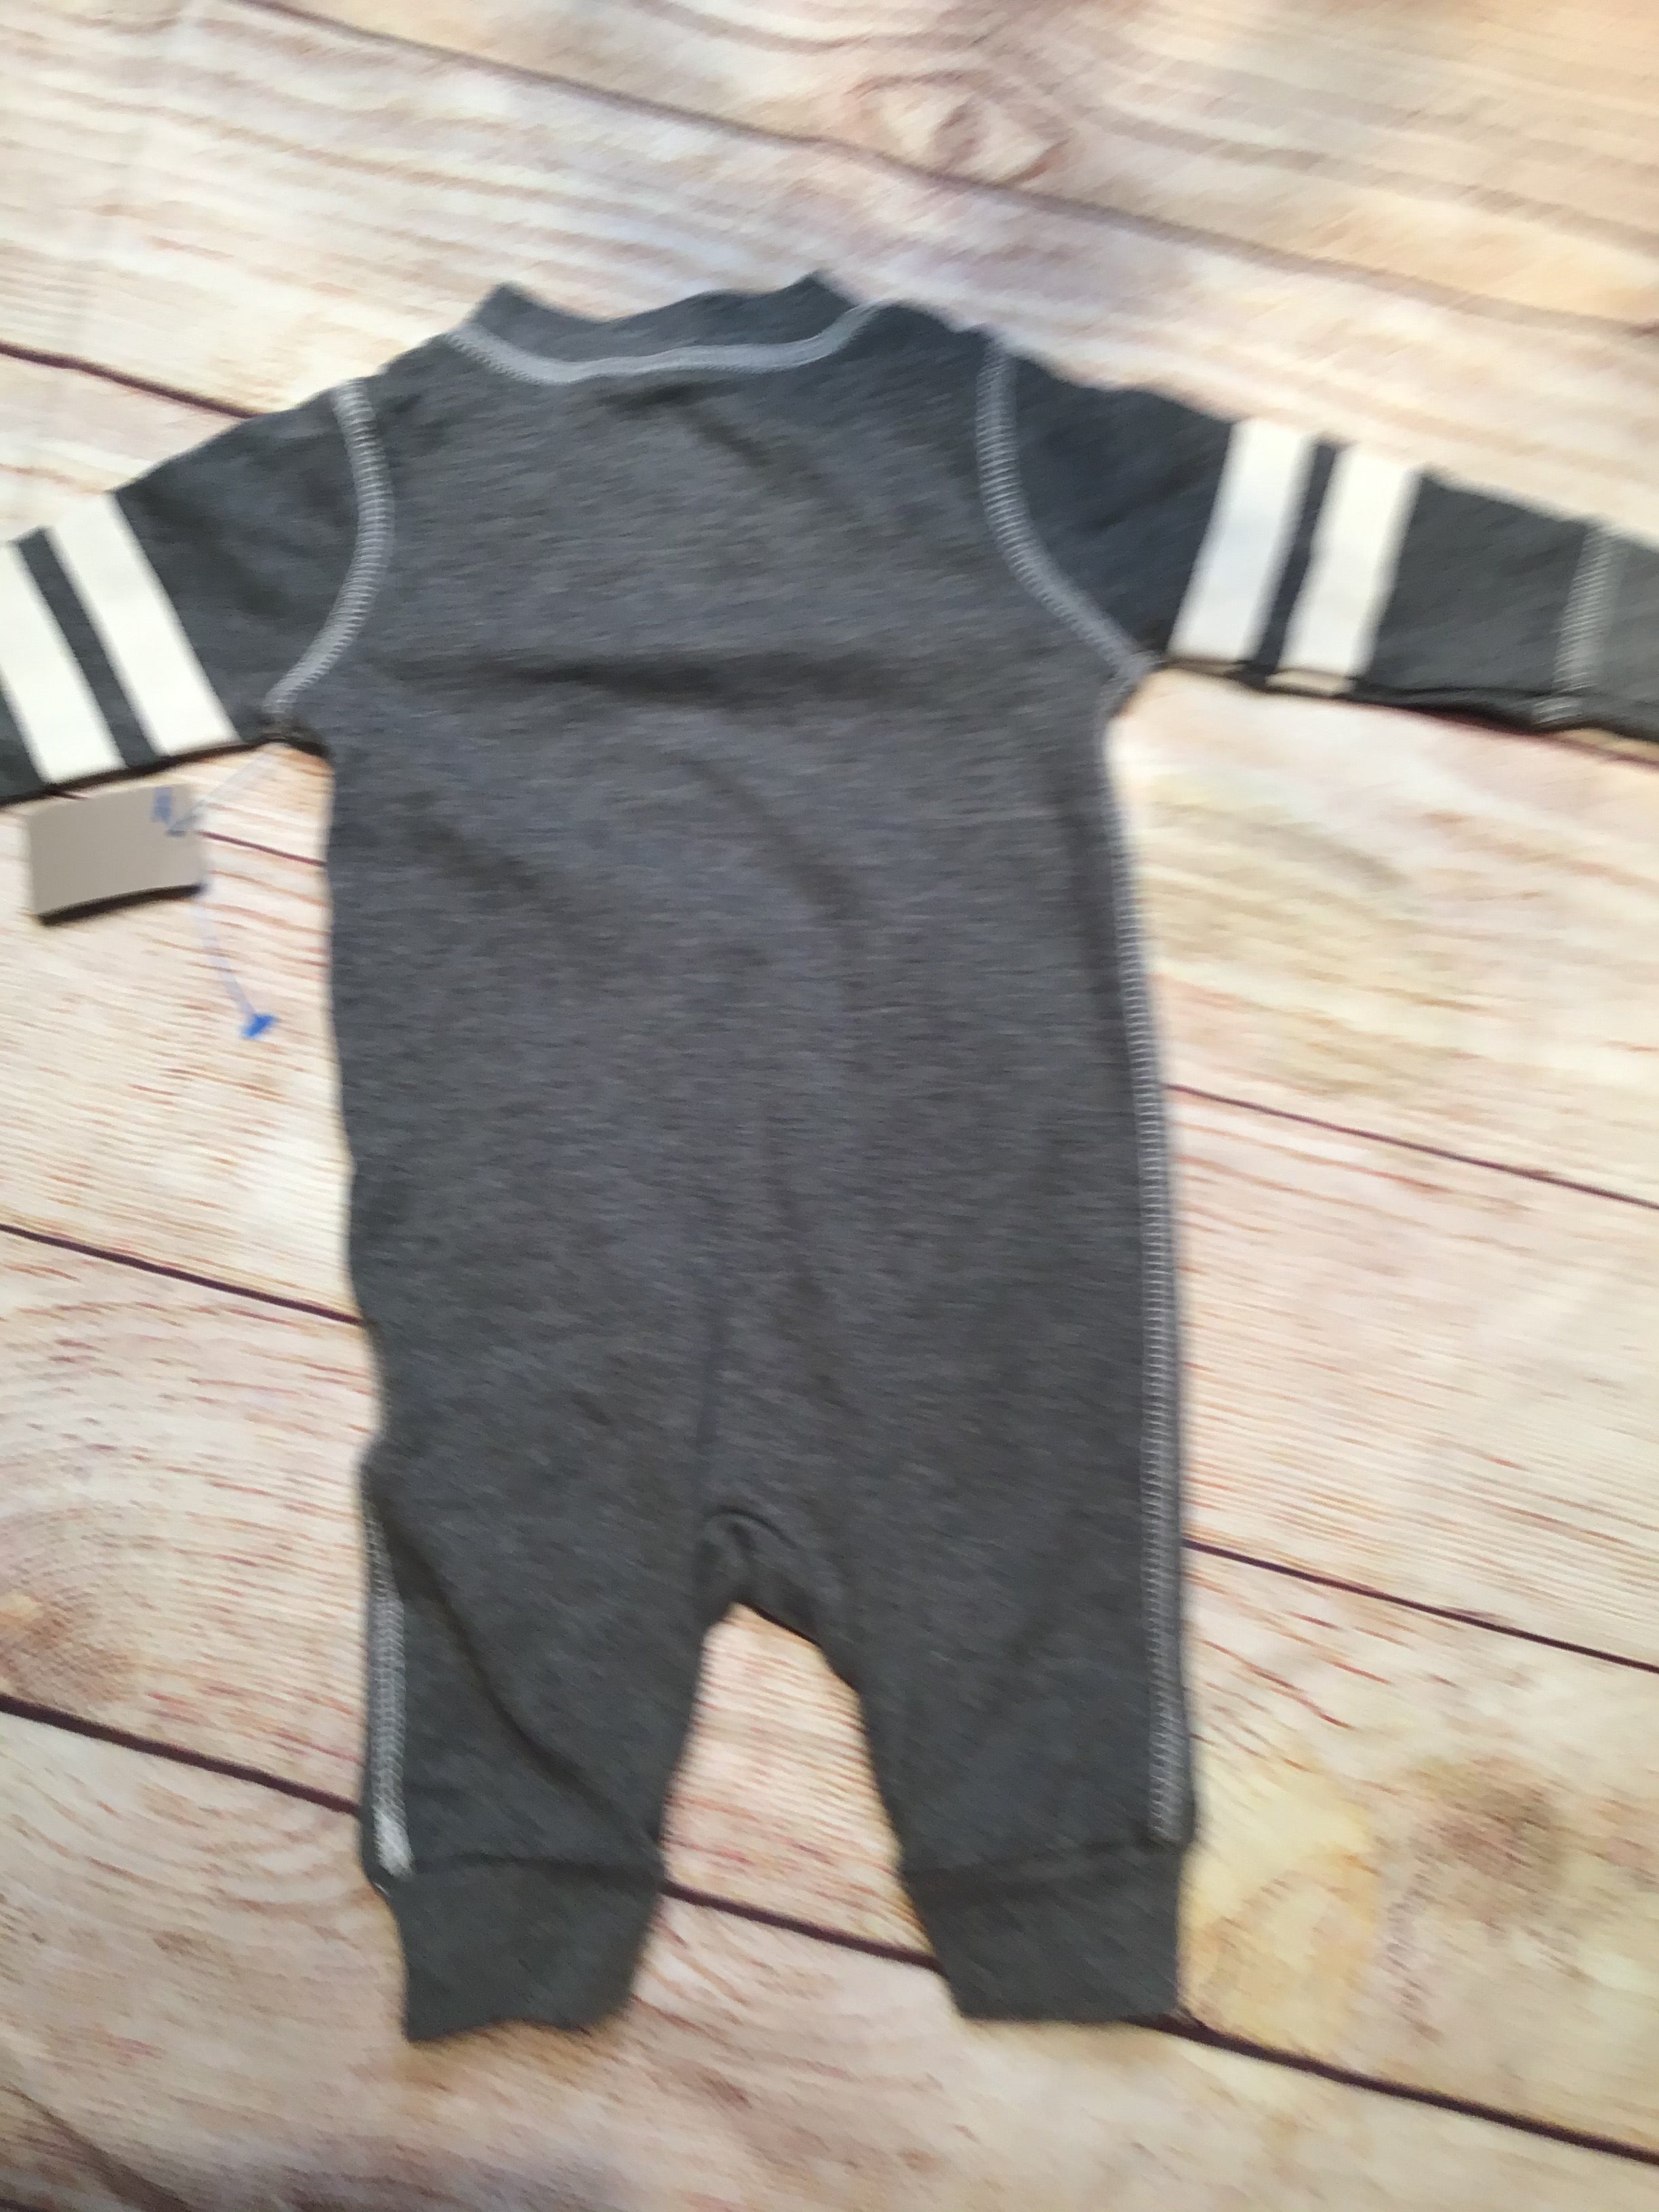 Mini Heroes Baby Boy 1pc Long Sleeve Gray Romper sz 3m